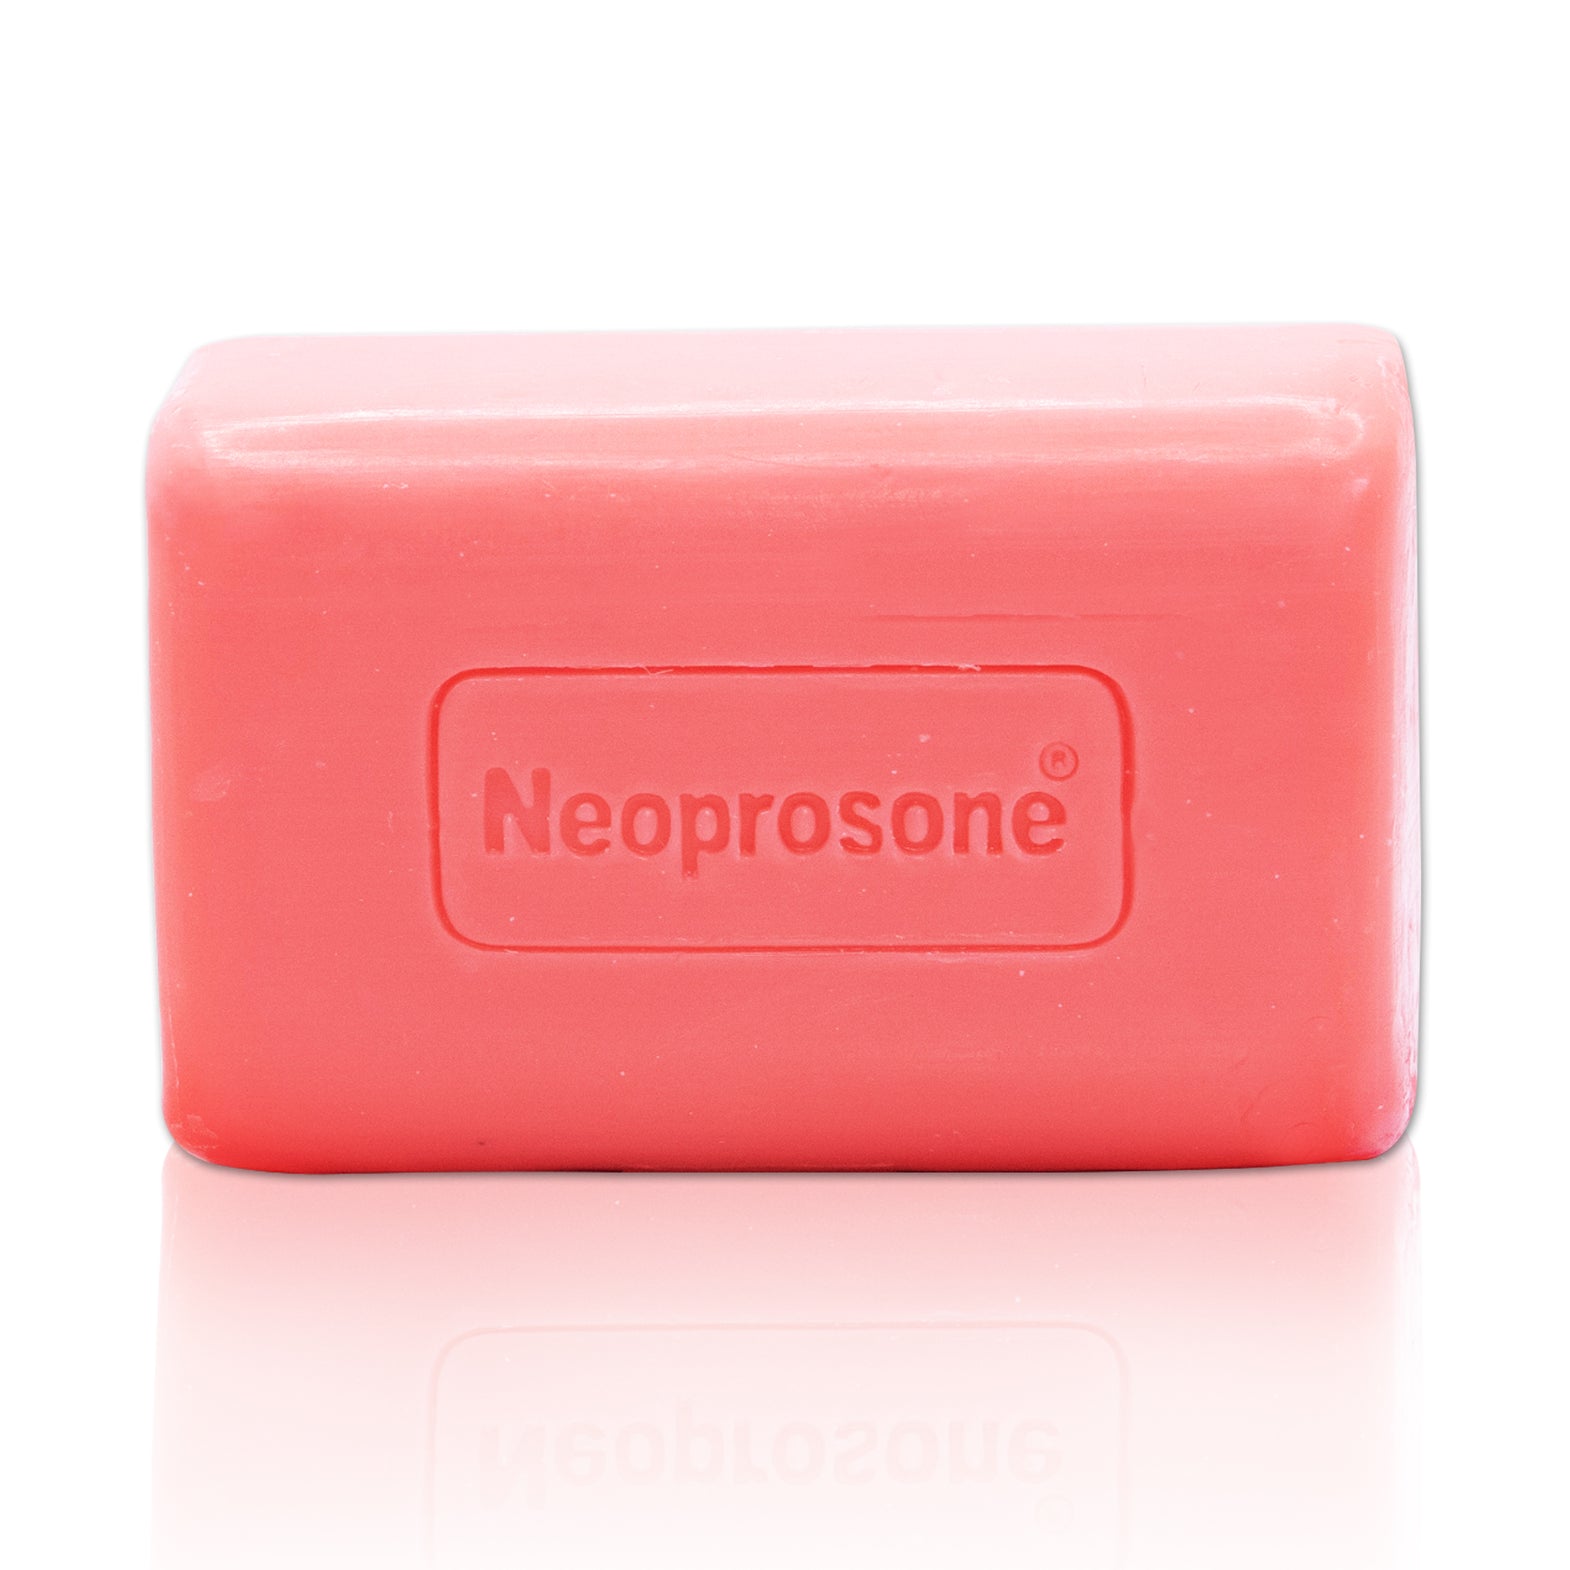 Neoprosone Vit C Cleansing Bar 200g